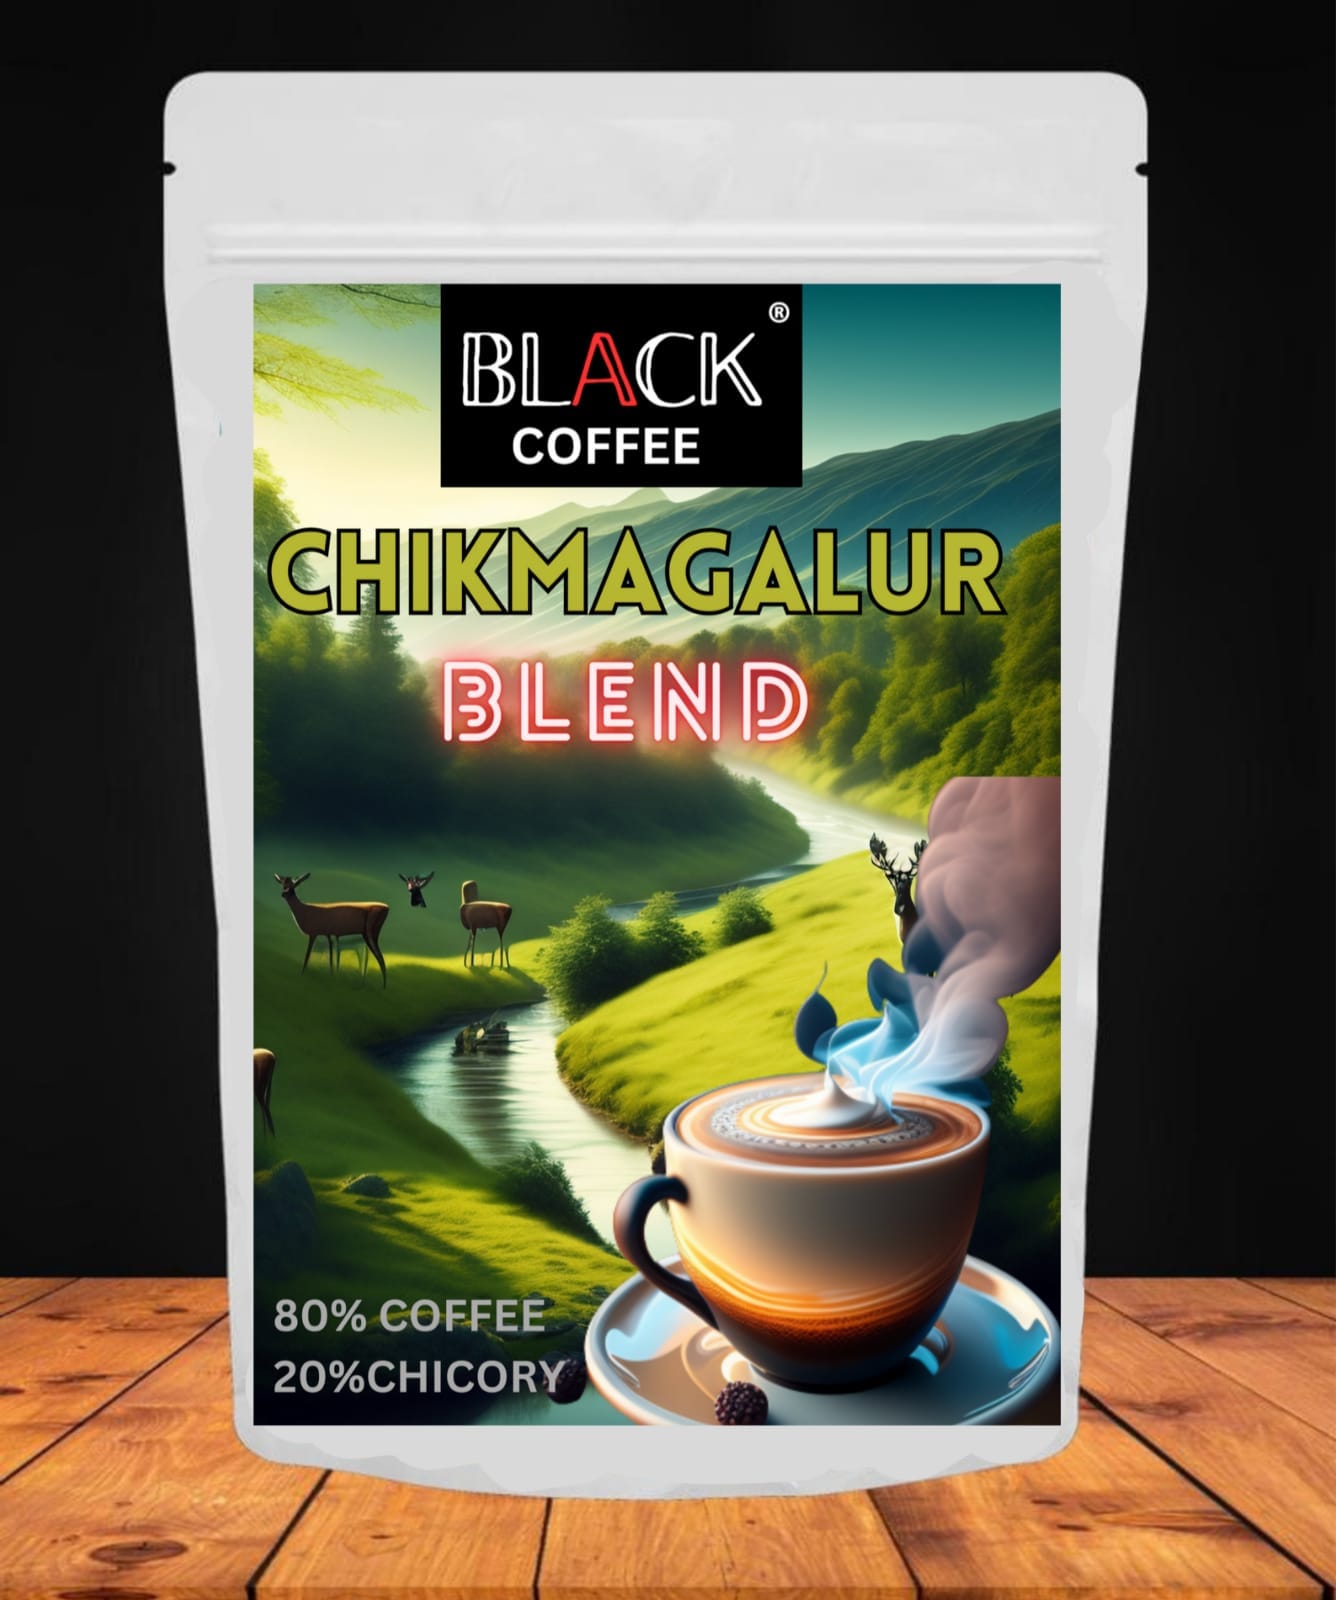 CHIKMAGALUR BLEND Premium Filter Coffee, Black Coffee Roasters